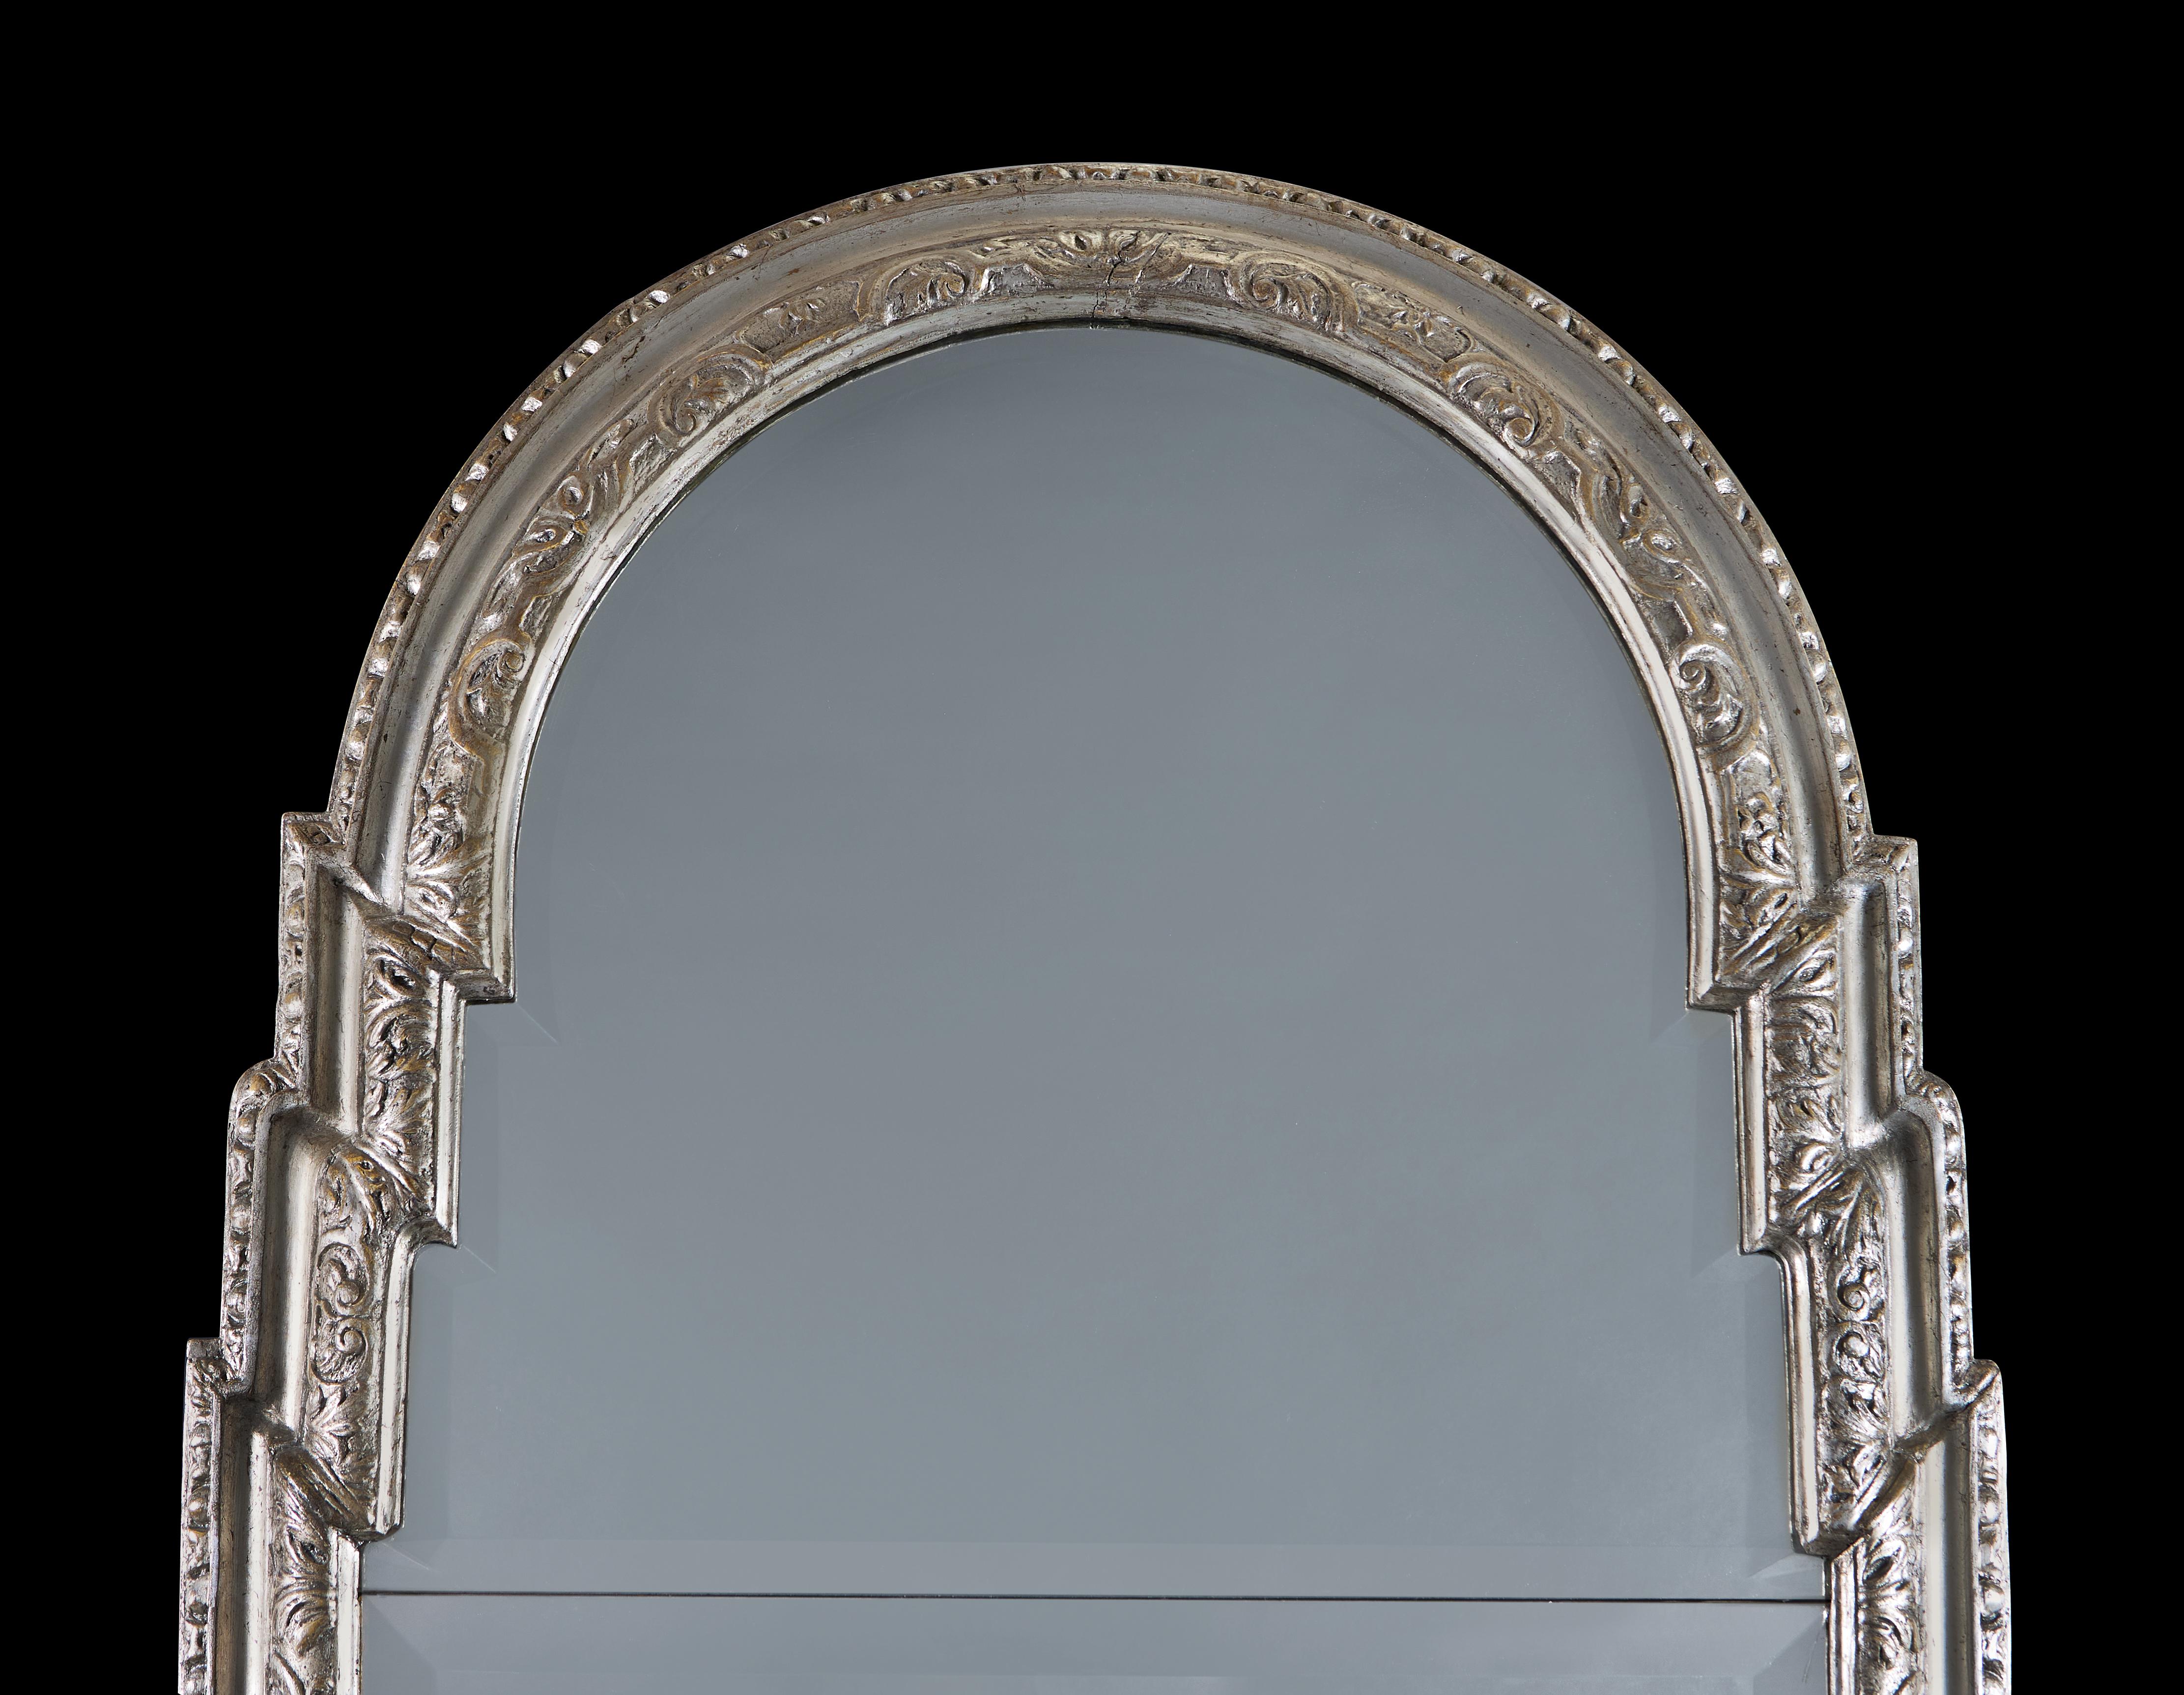 Queen Anne Fine Late 18th Century Silver Gilt Pier Glass Mirror For Sale